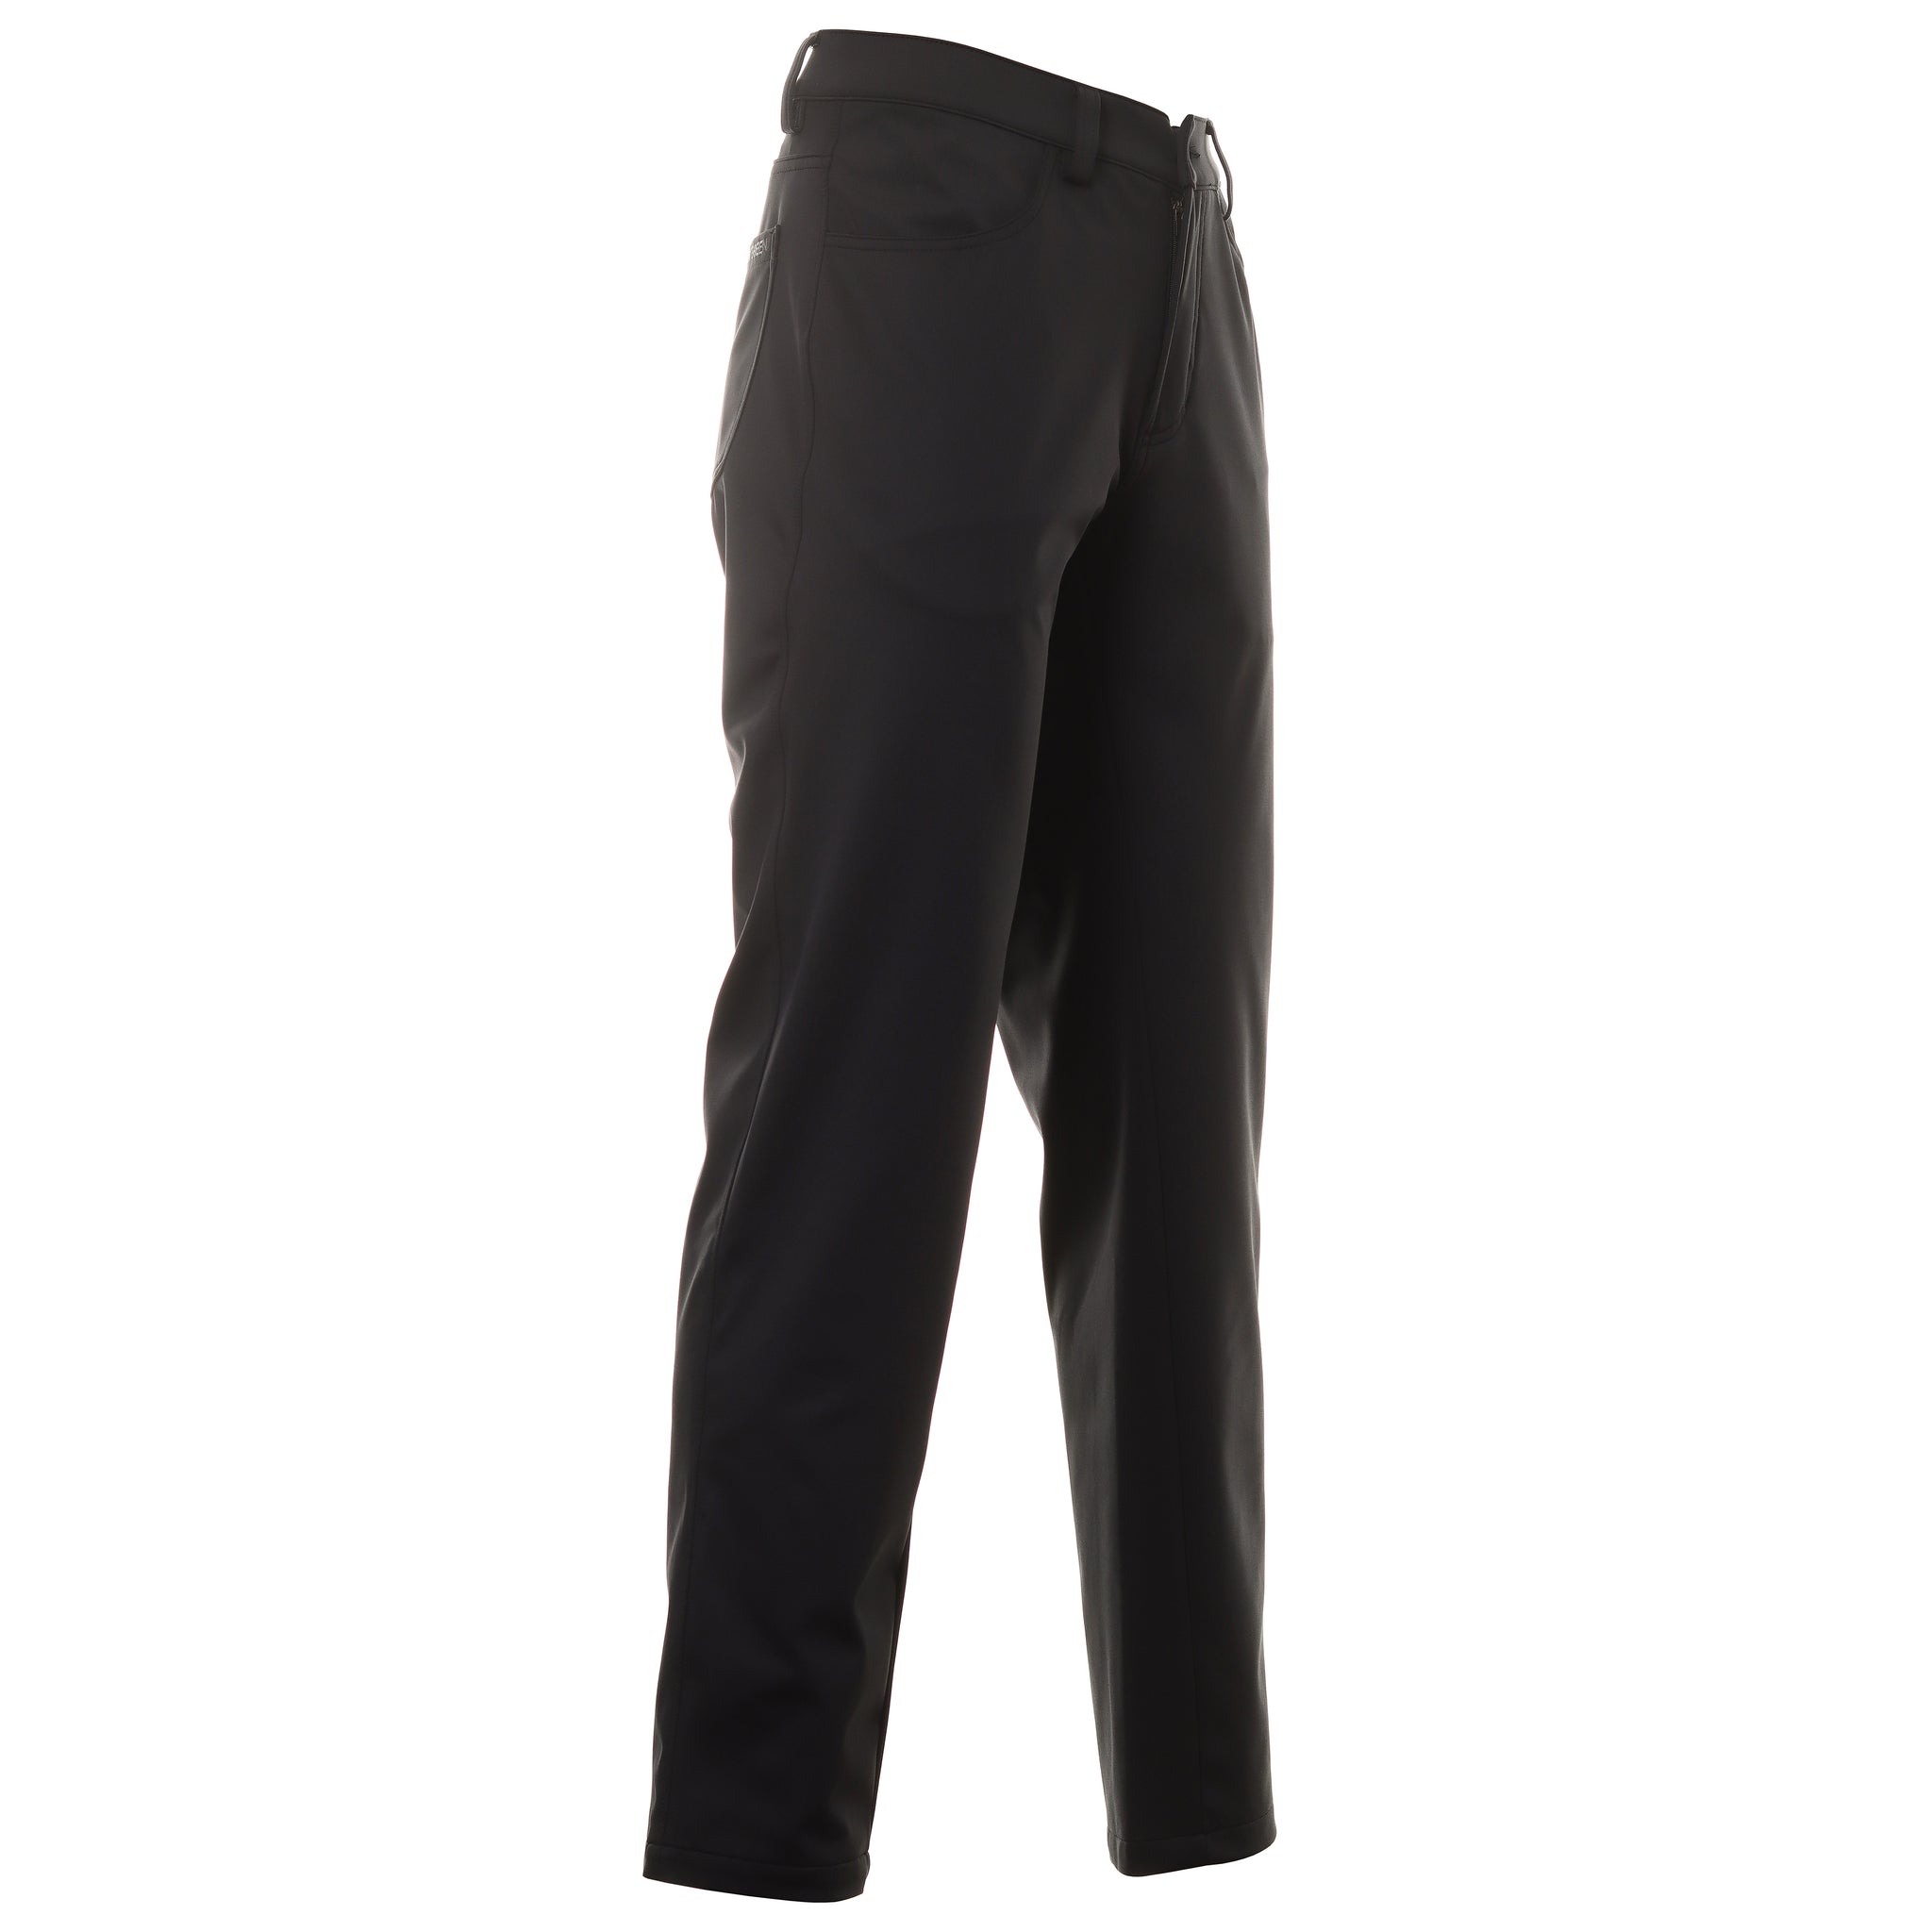 galvin-green-lane-interface-1-golf-trousers-black-9403